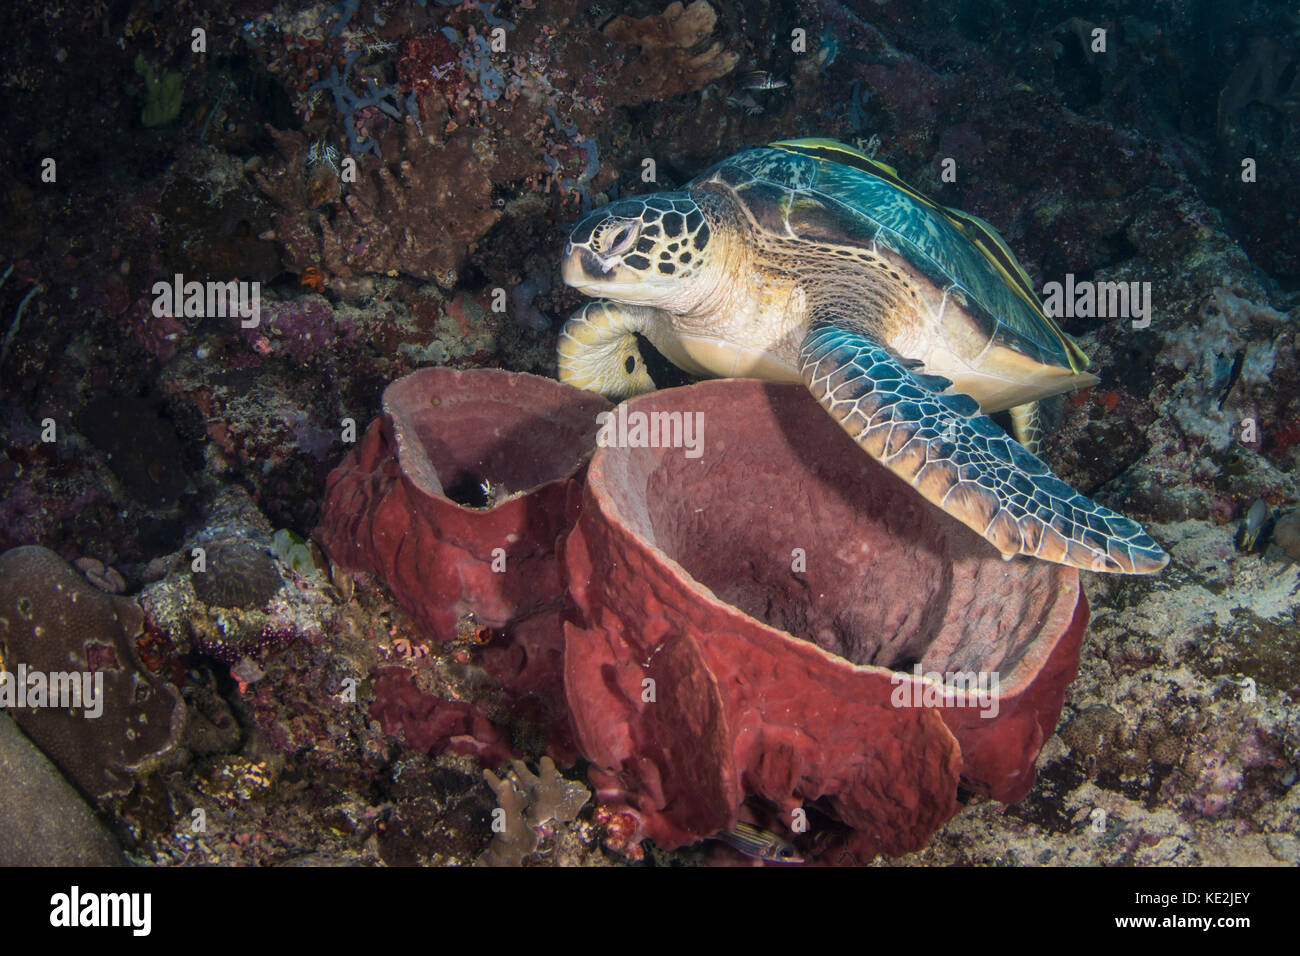 Green sea turtle on a barrel sponge in North Sulawesi, Indonesia. Stock Photo